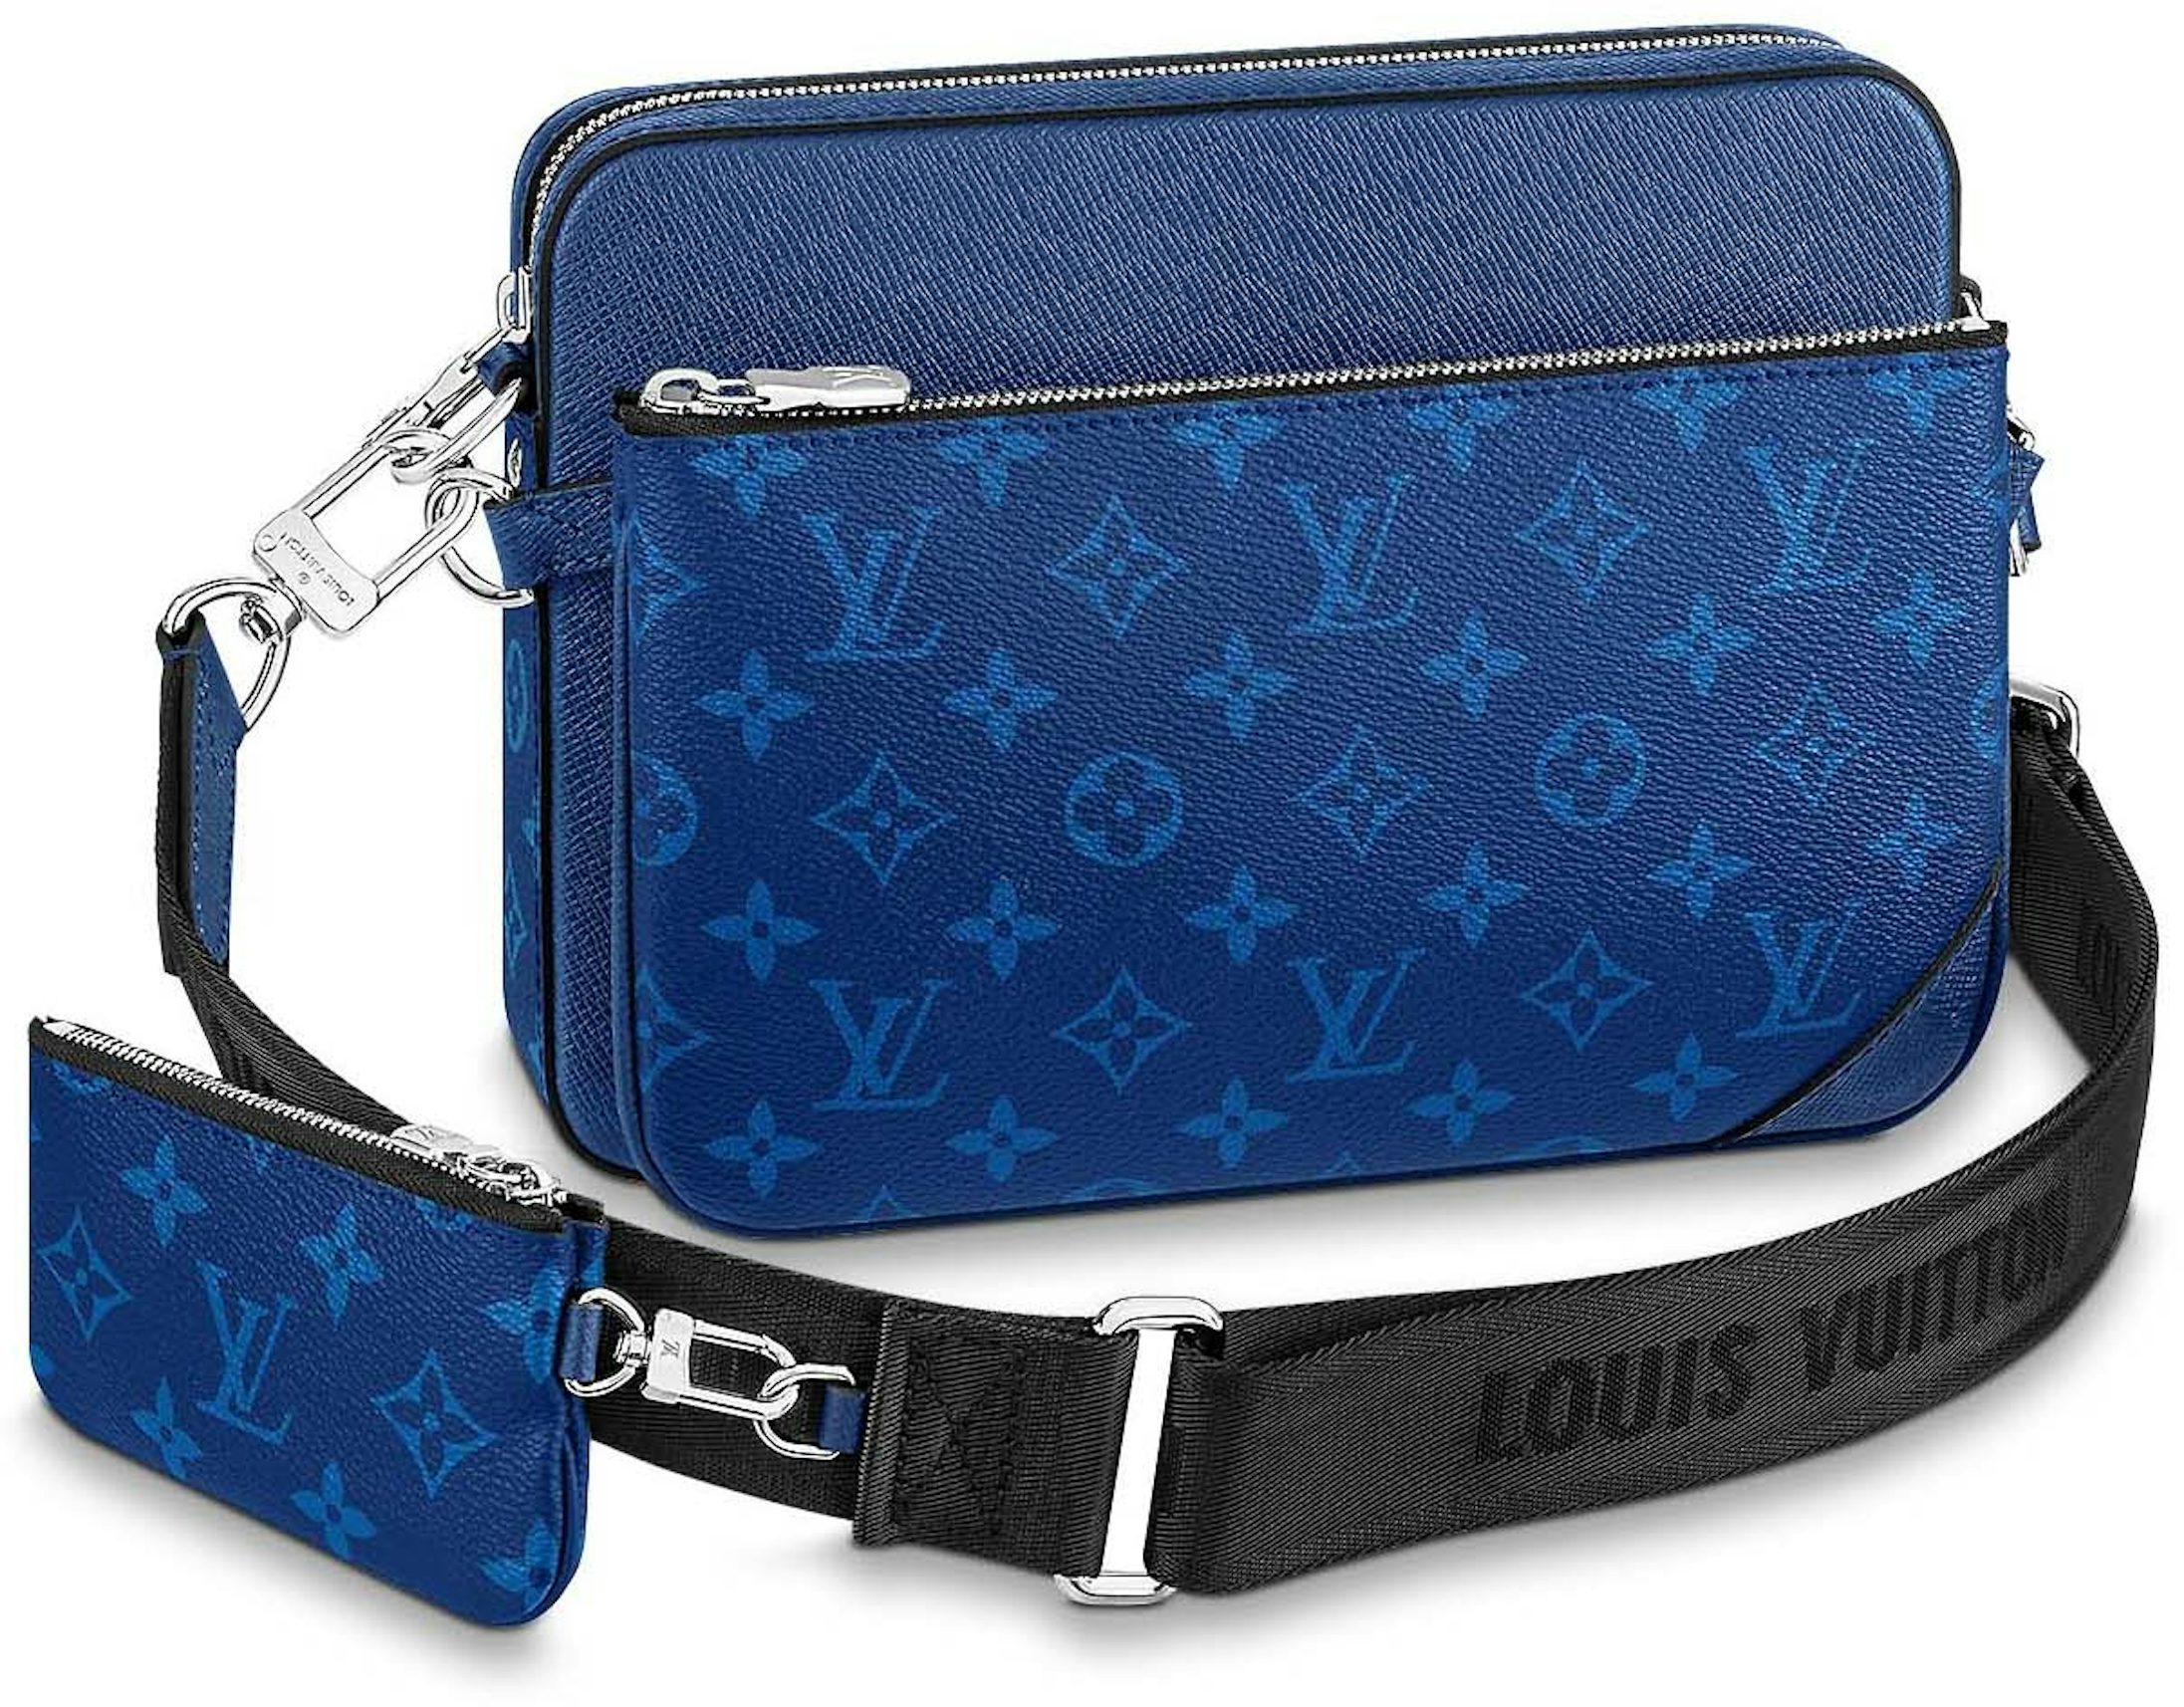 Louis Vuitton Trio Messenger Cobalt Blue